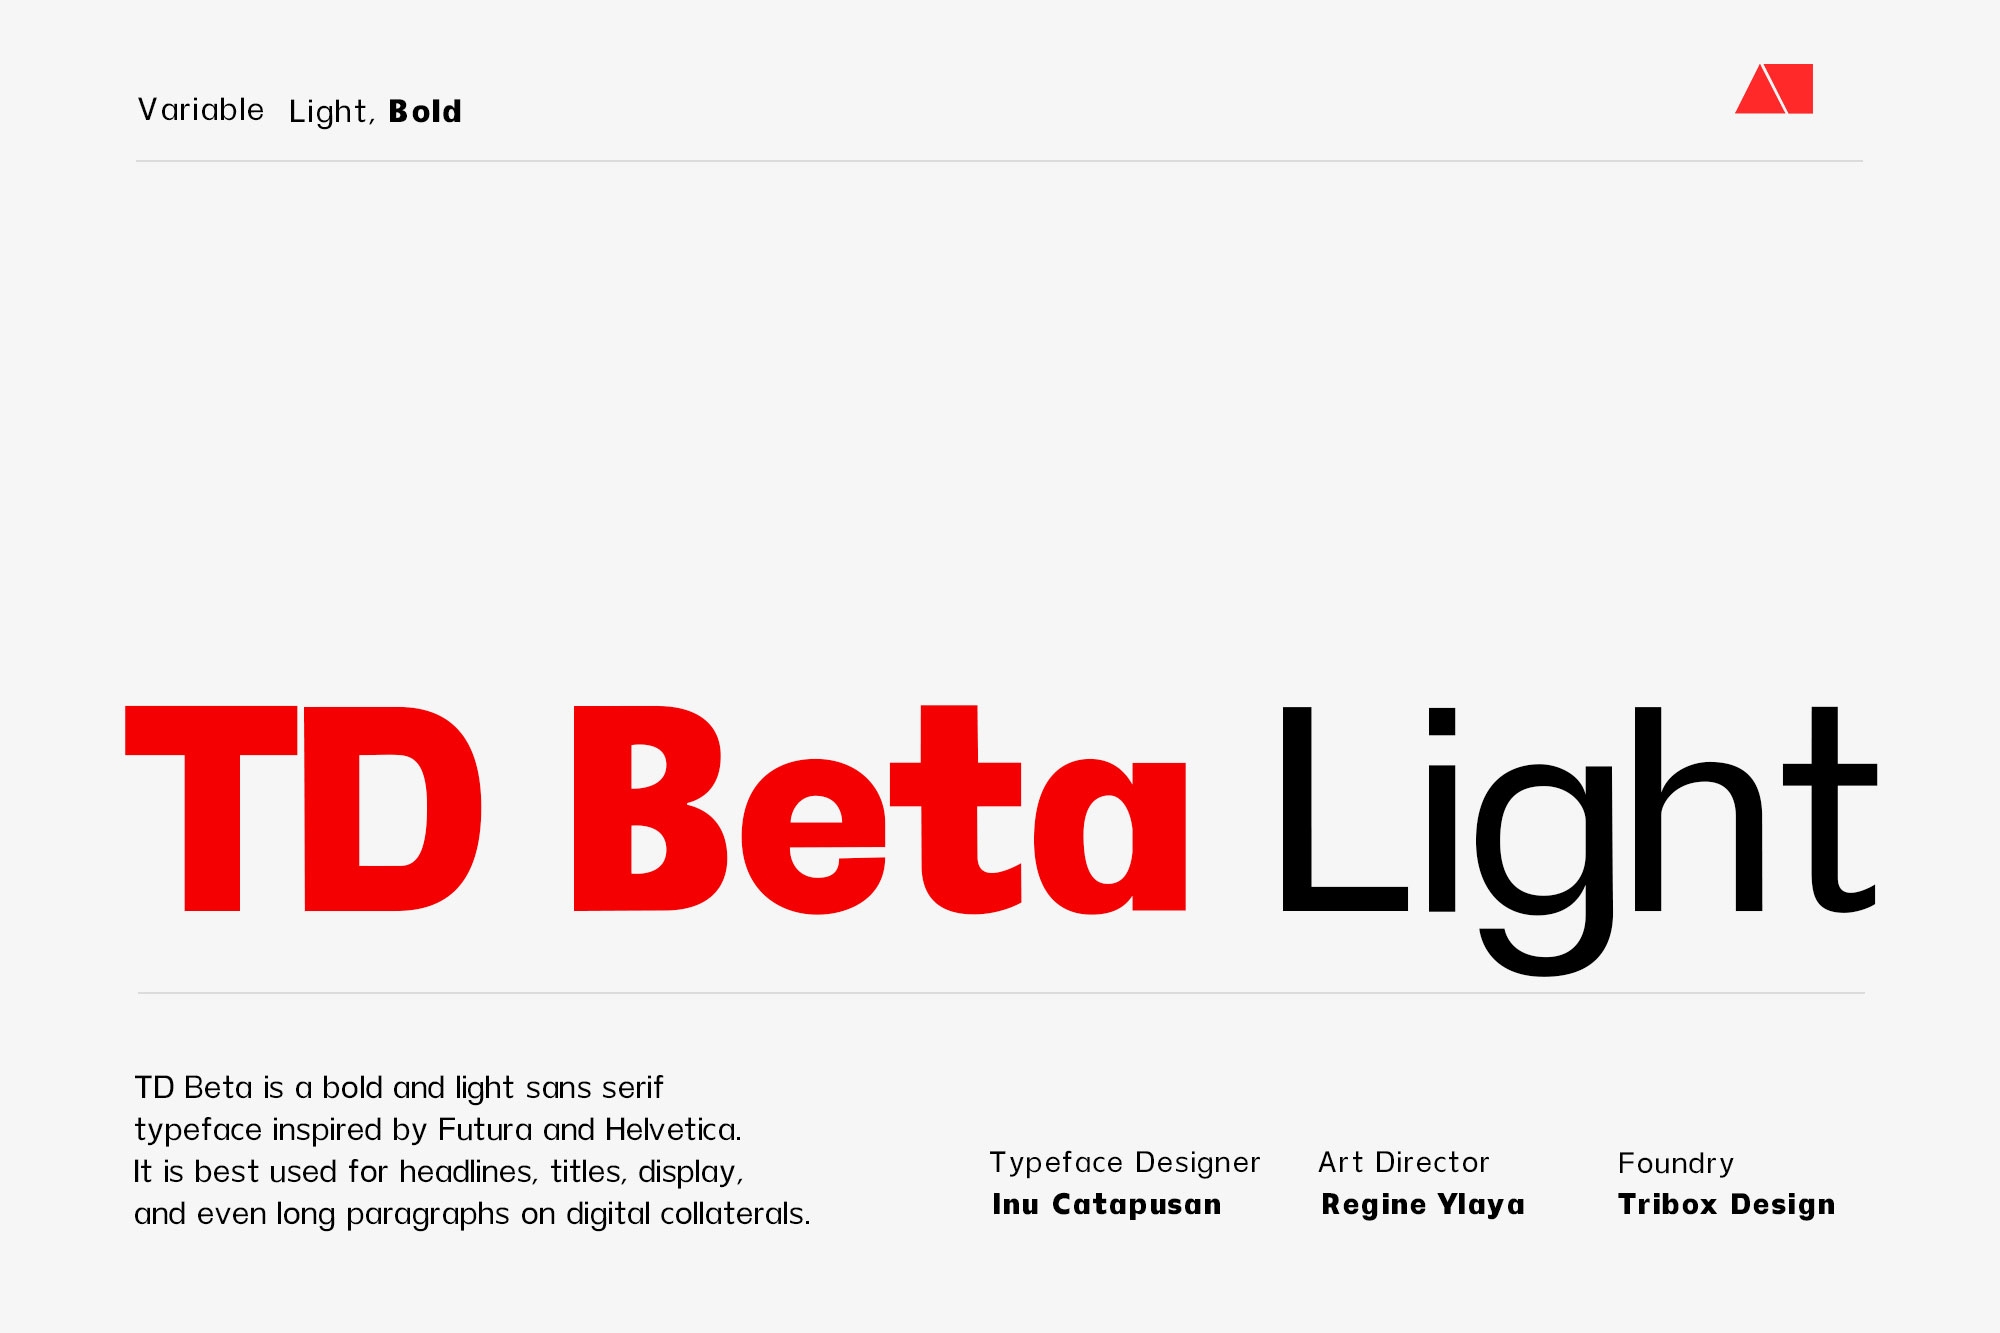 TD Beta Light